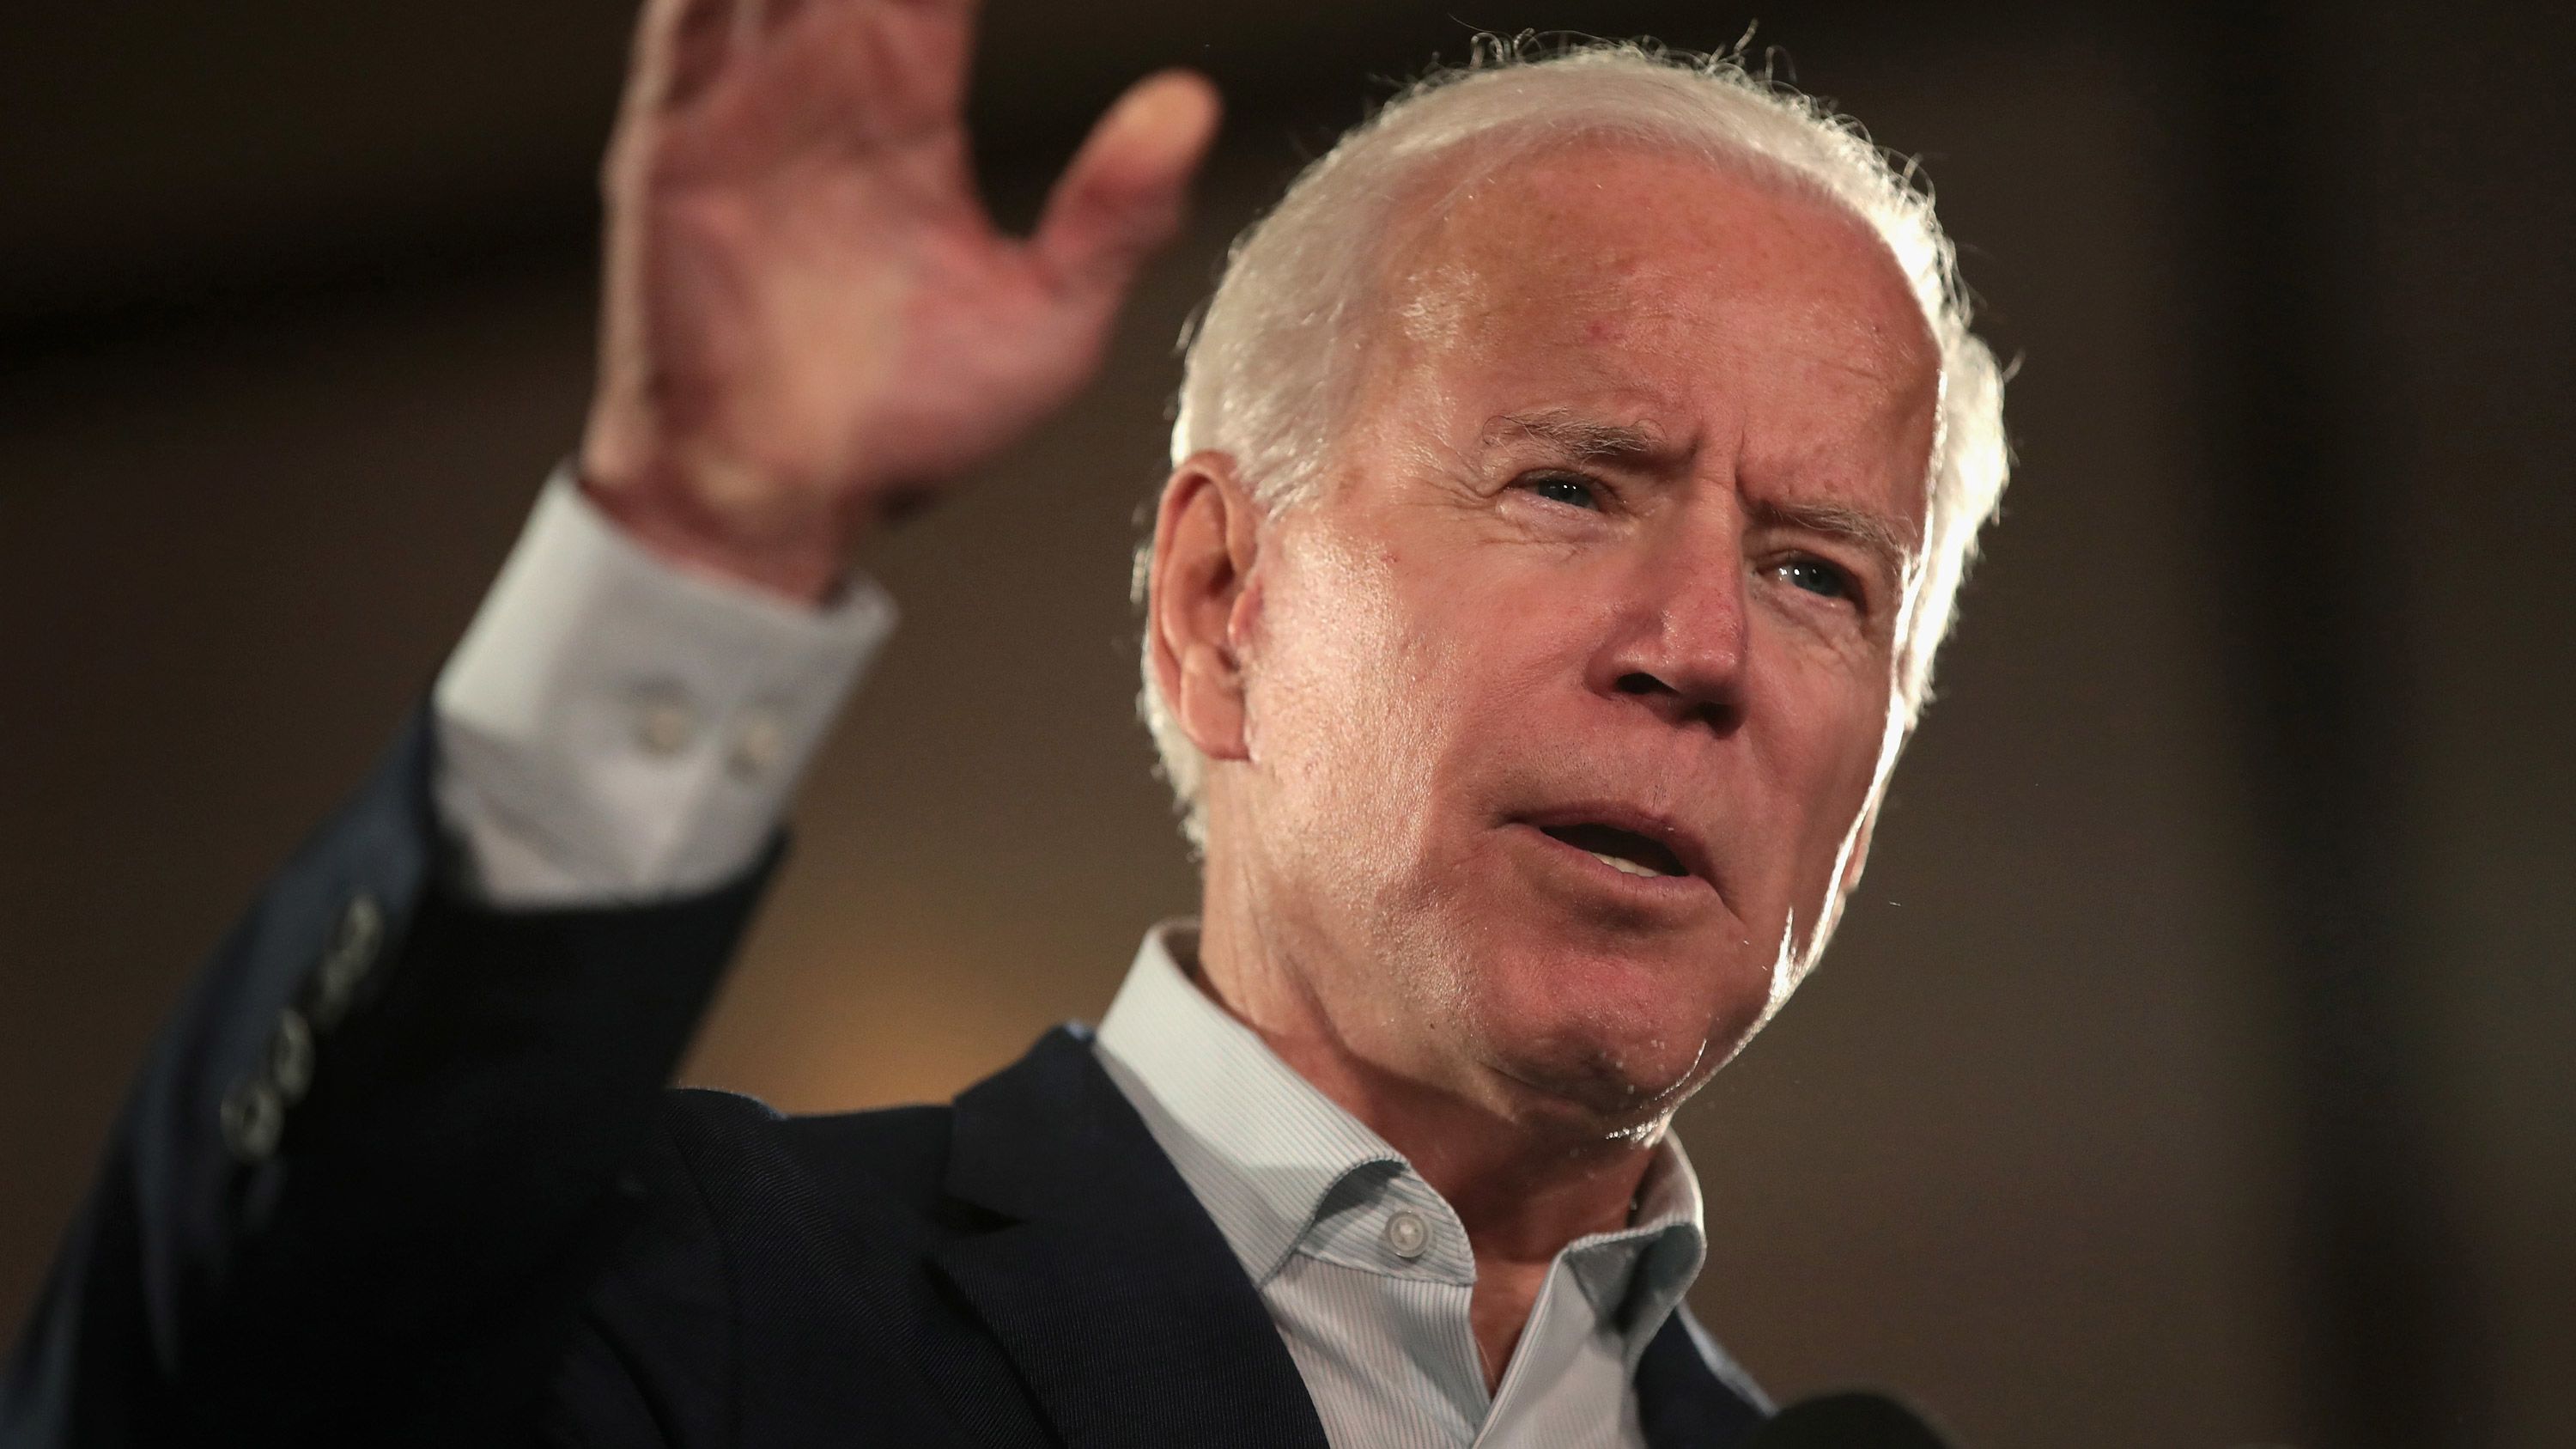 Joe Biden readies major message of strength ahead likely 2020 run | CNN Politics